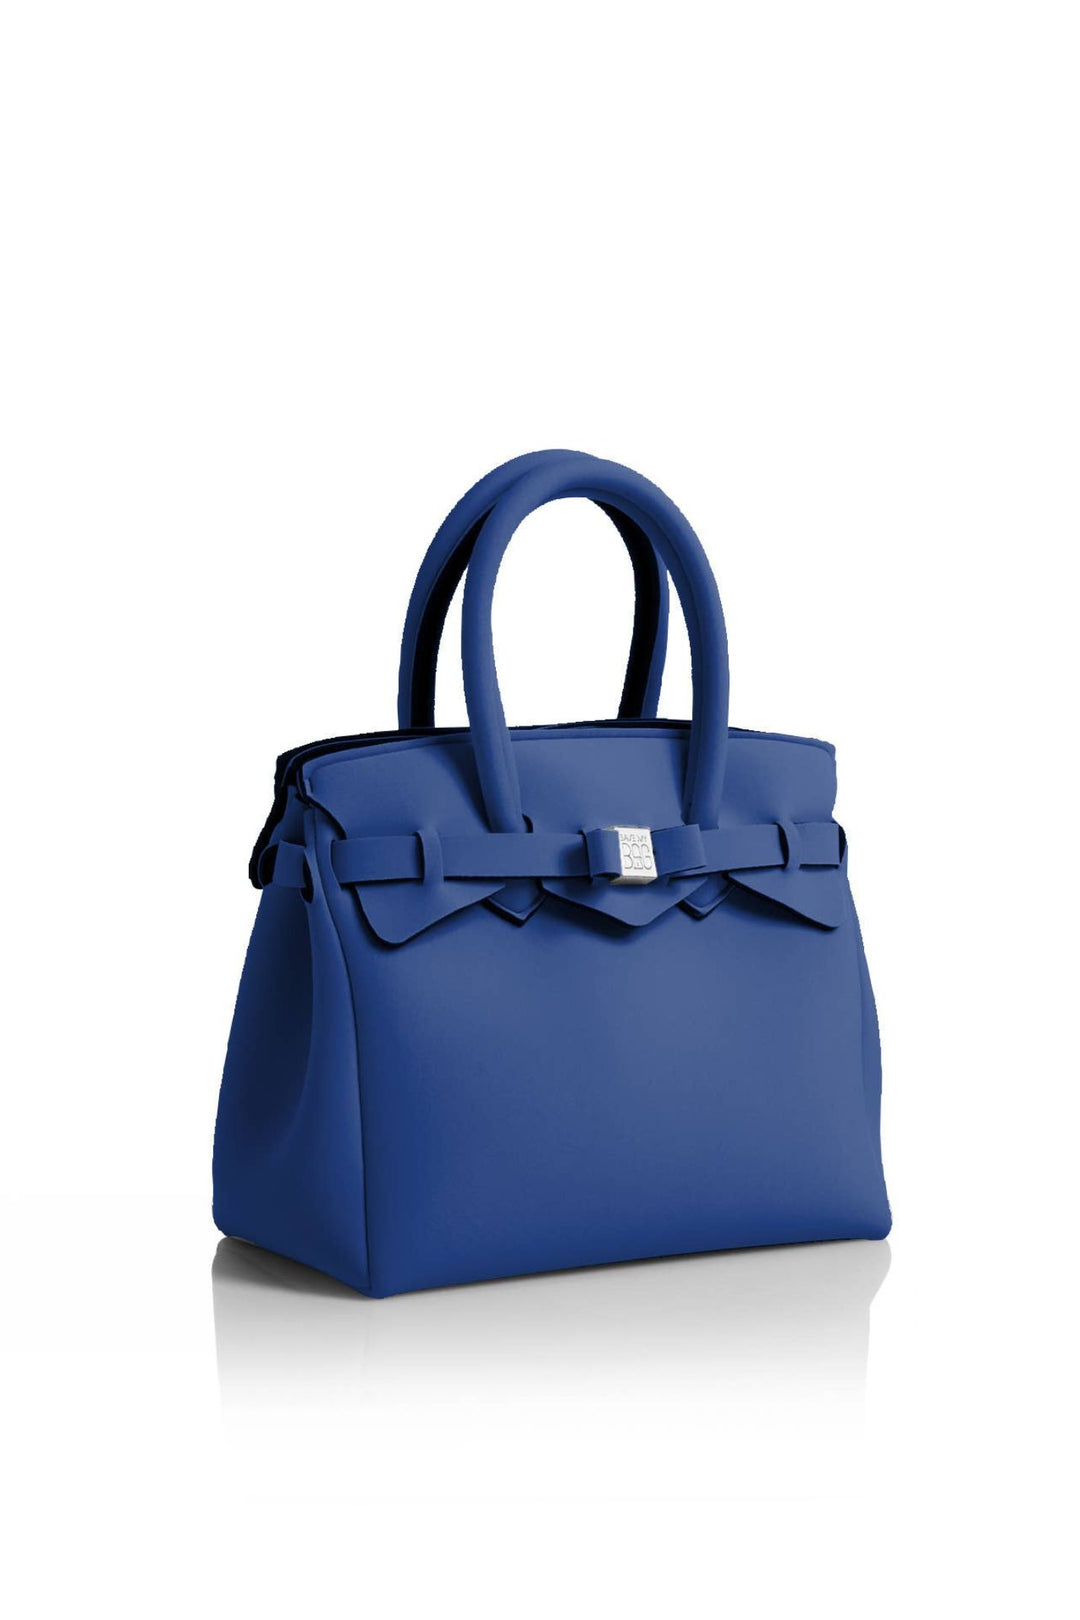 Save My Bag Nottingham Blue Washable Small Handbag